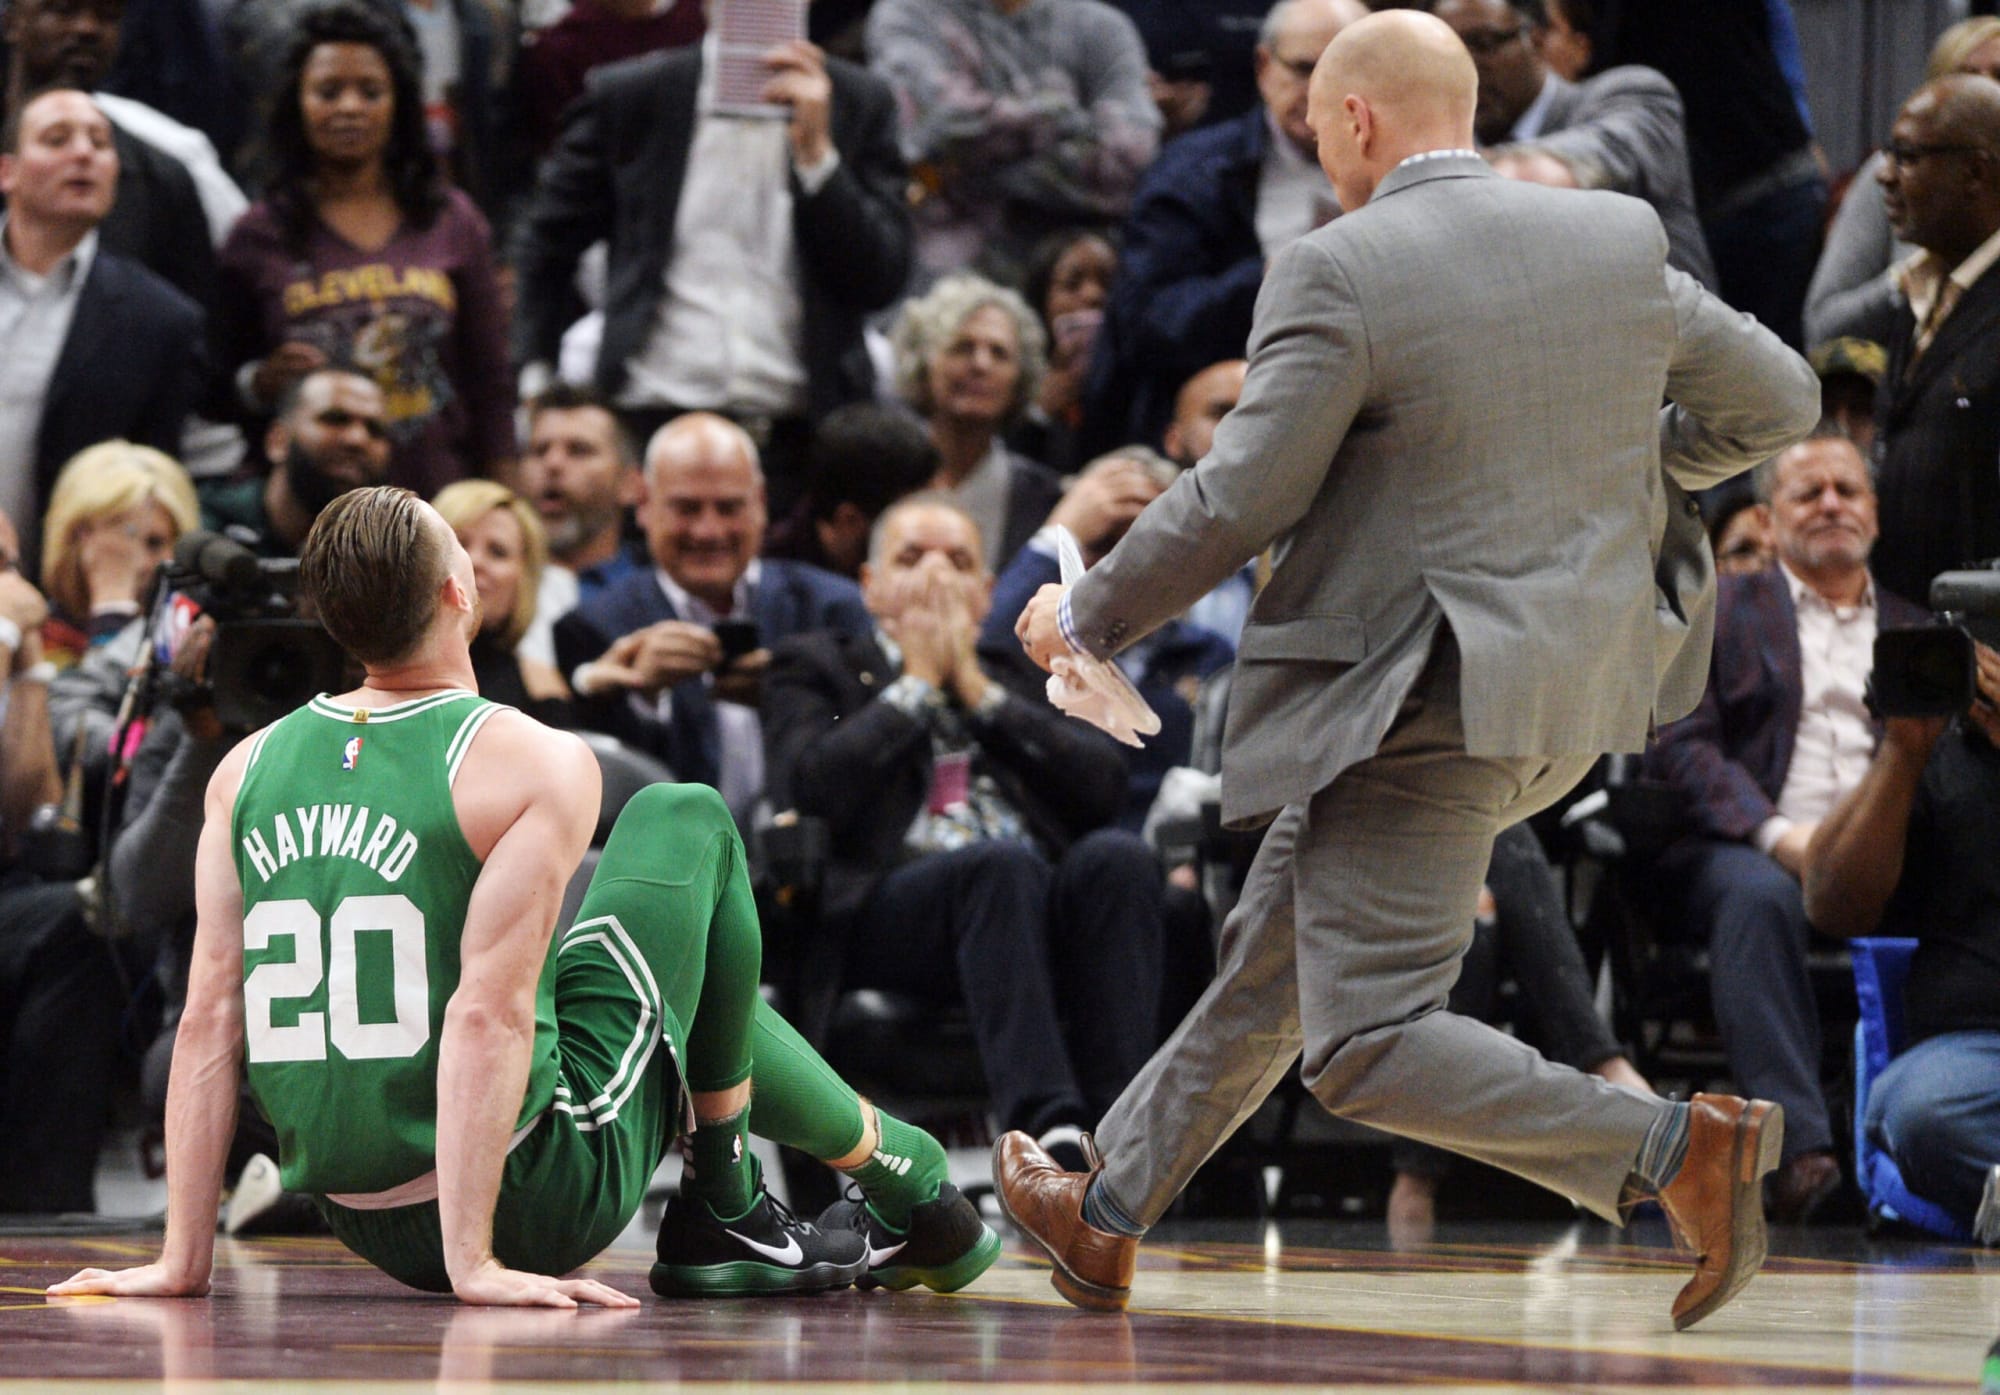 Gordon Hayward's Injury: Celtics' Star and Team Learn to Cope